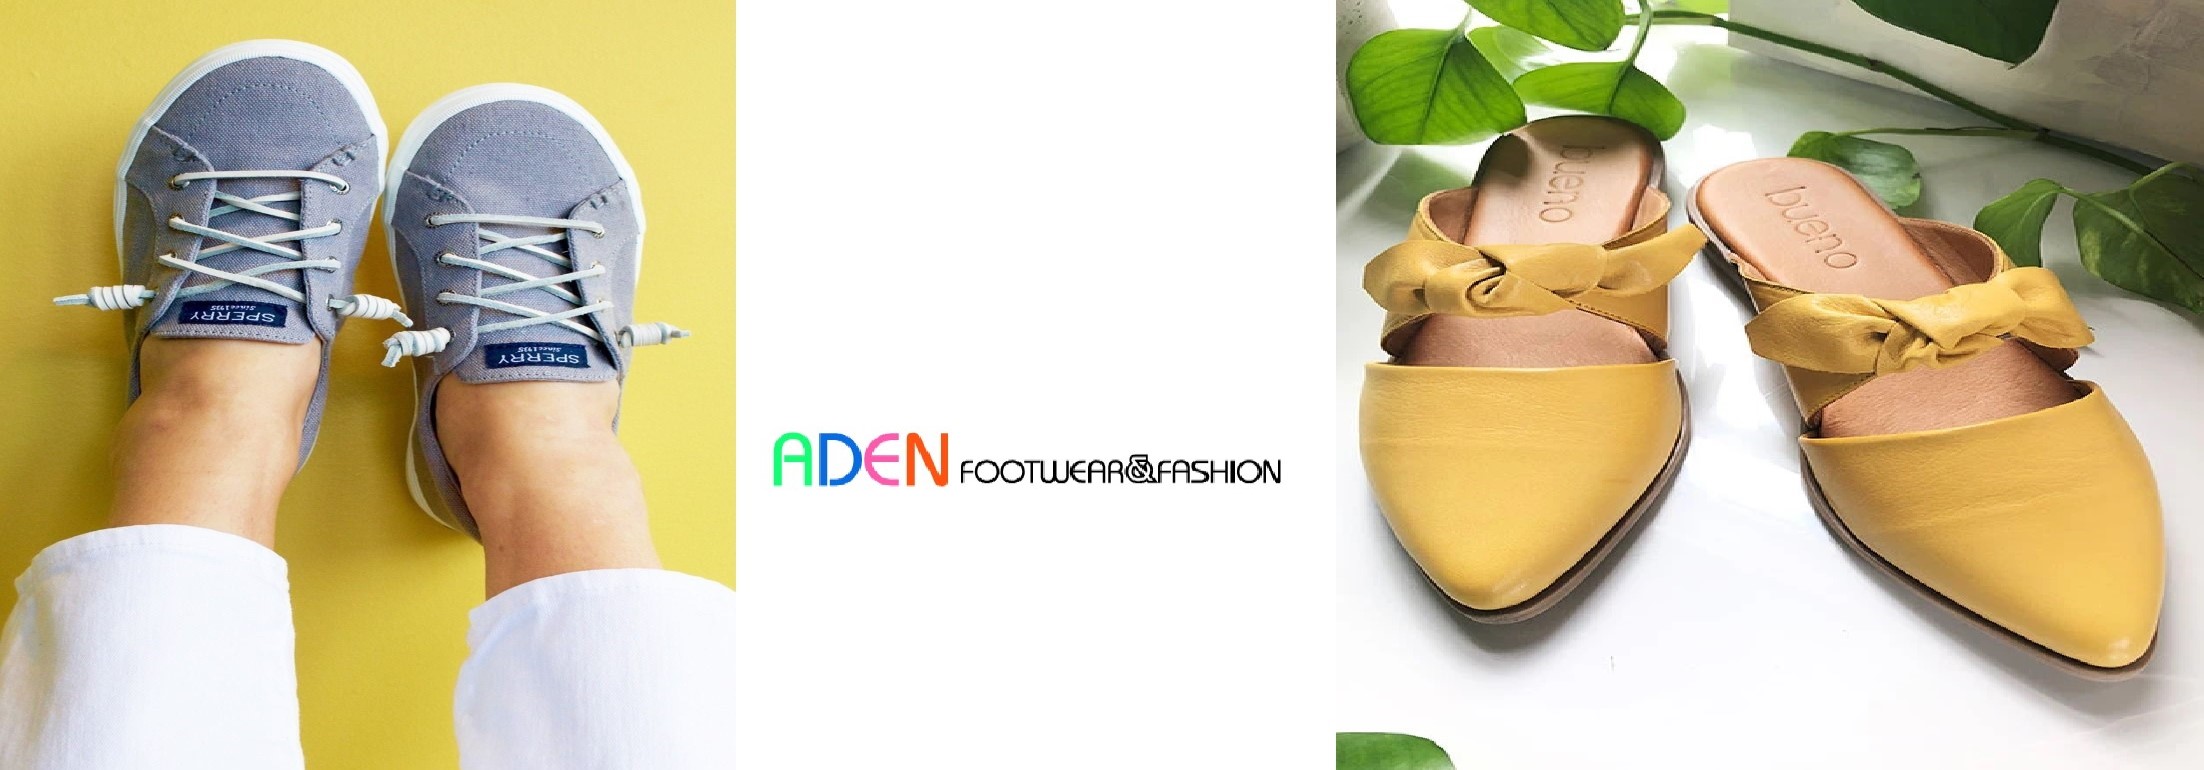 Aden Footwear & Fashion - Home